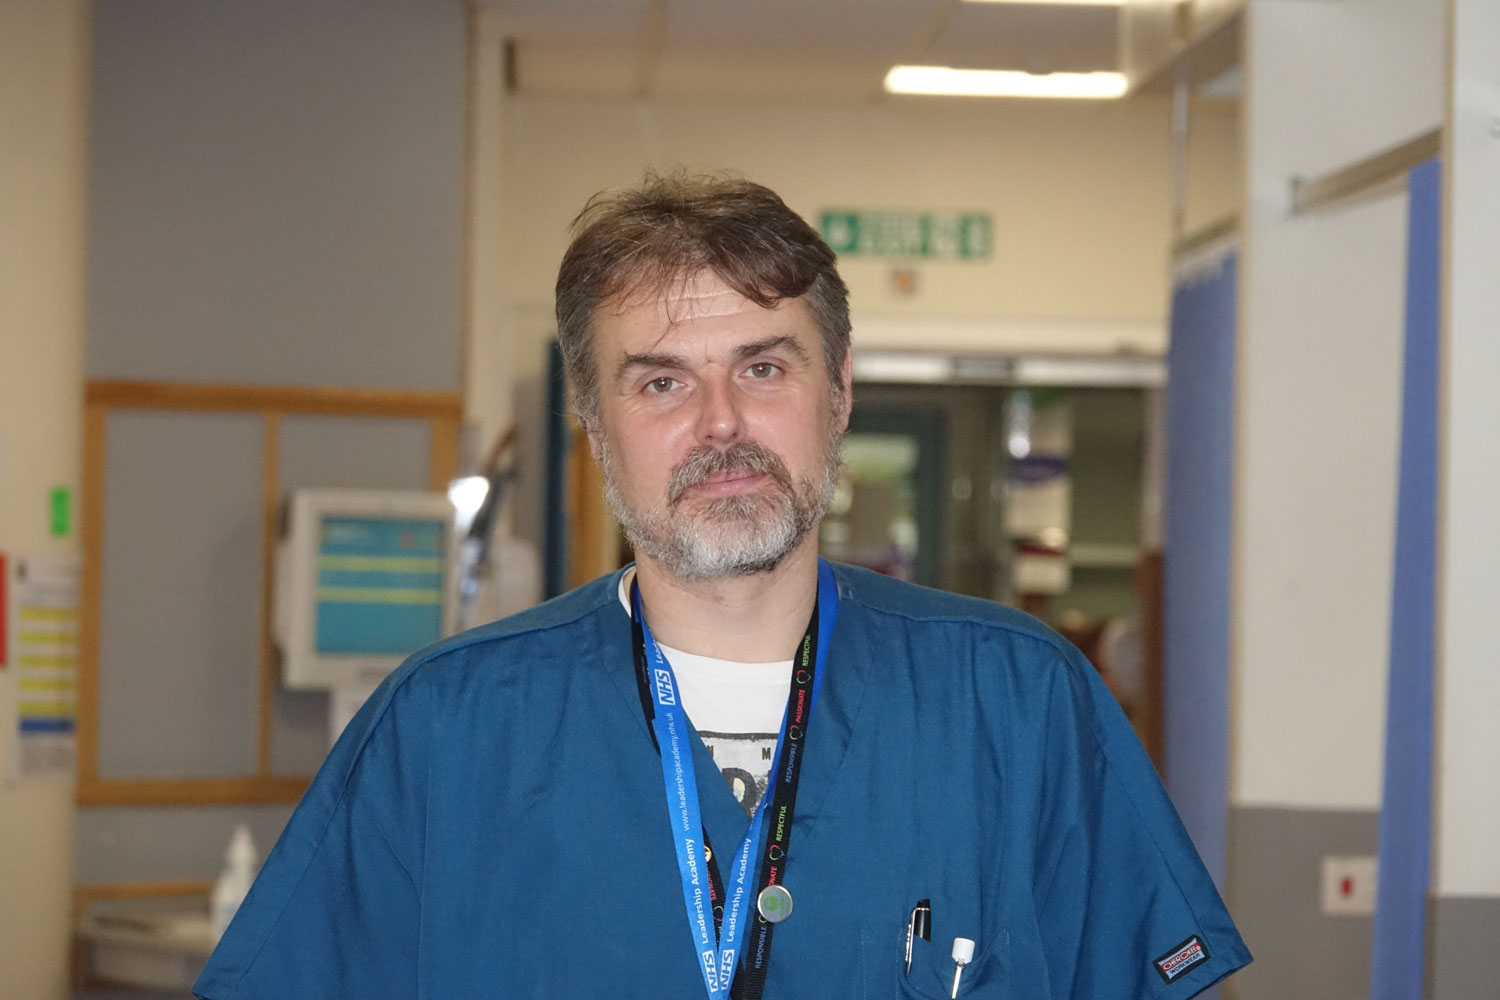 Dr Matt Shepherd, Lead Consultant for the Emergency Department at Harrogate District Hospital